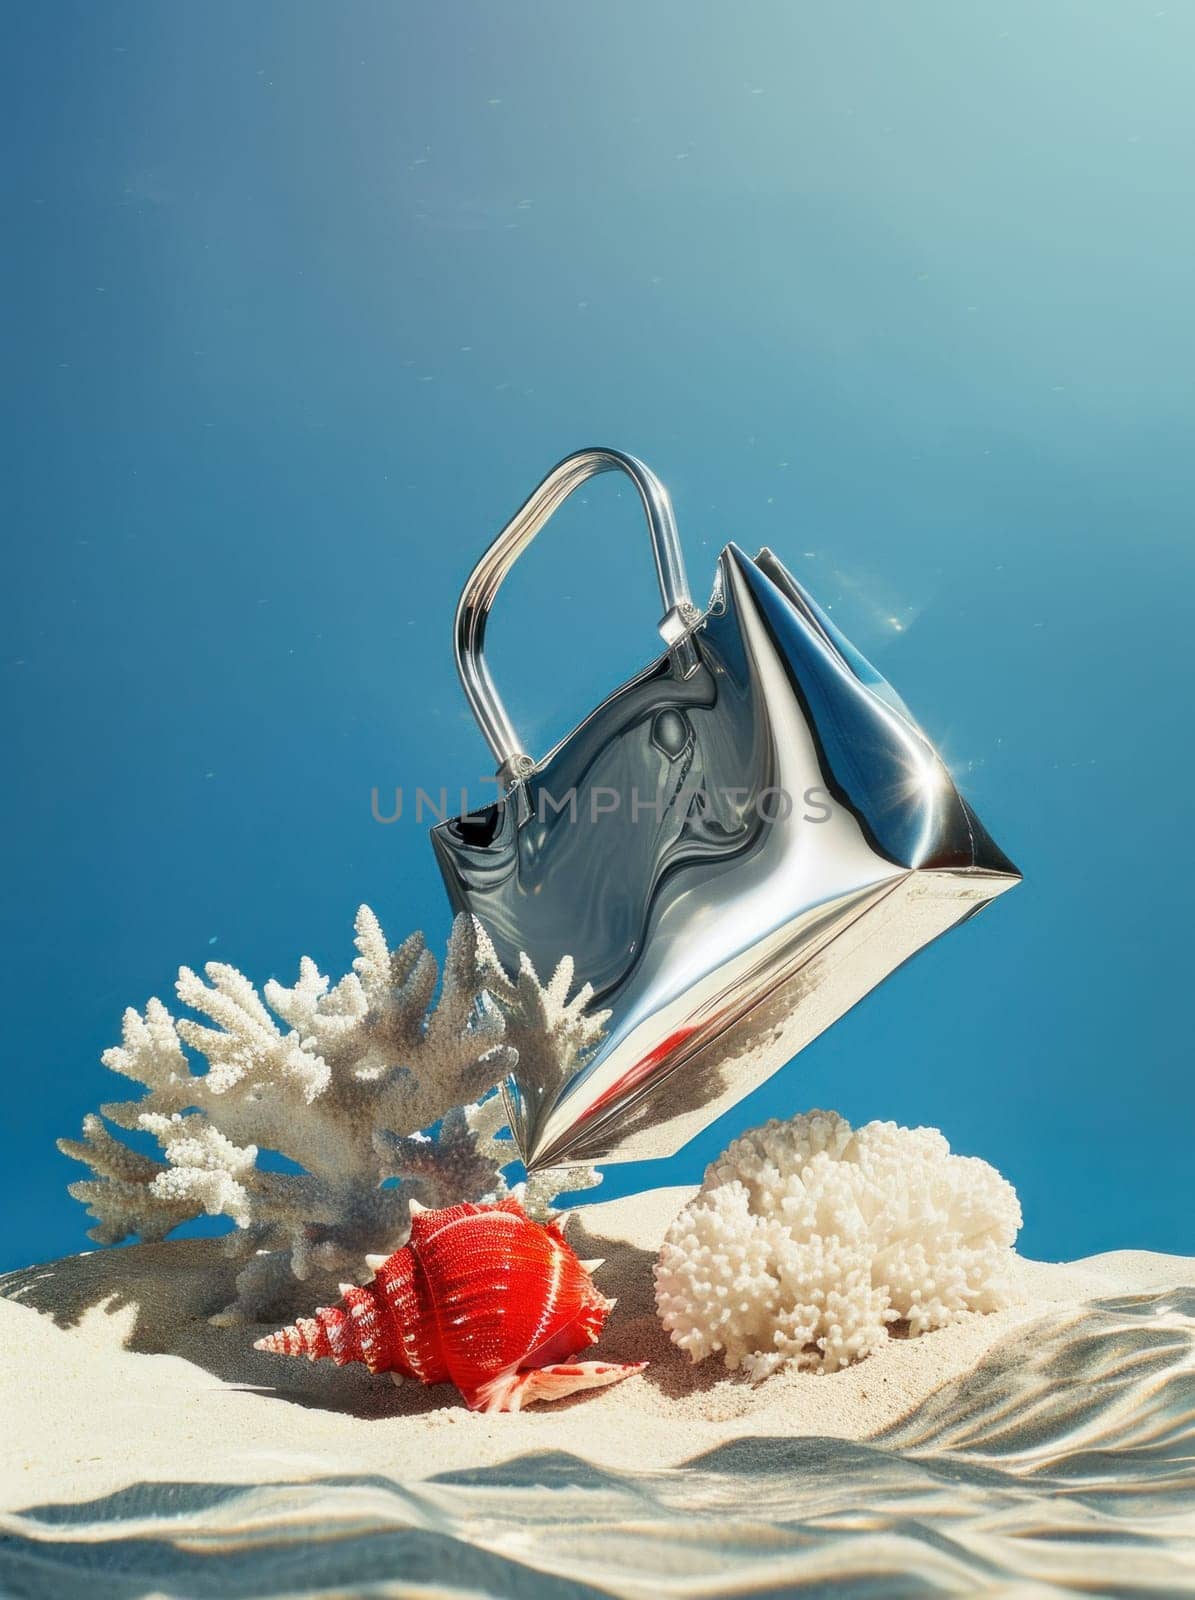 Fashionable silver handbag with seashell and starfish on sandy beach for summer travel collection